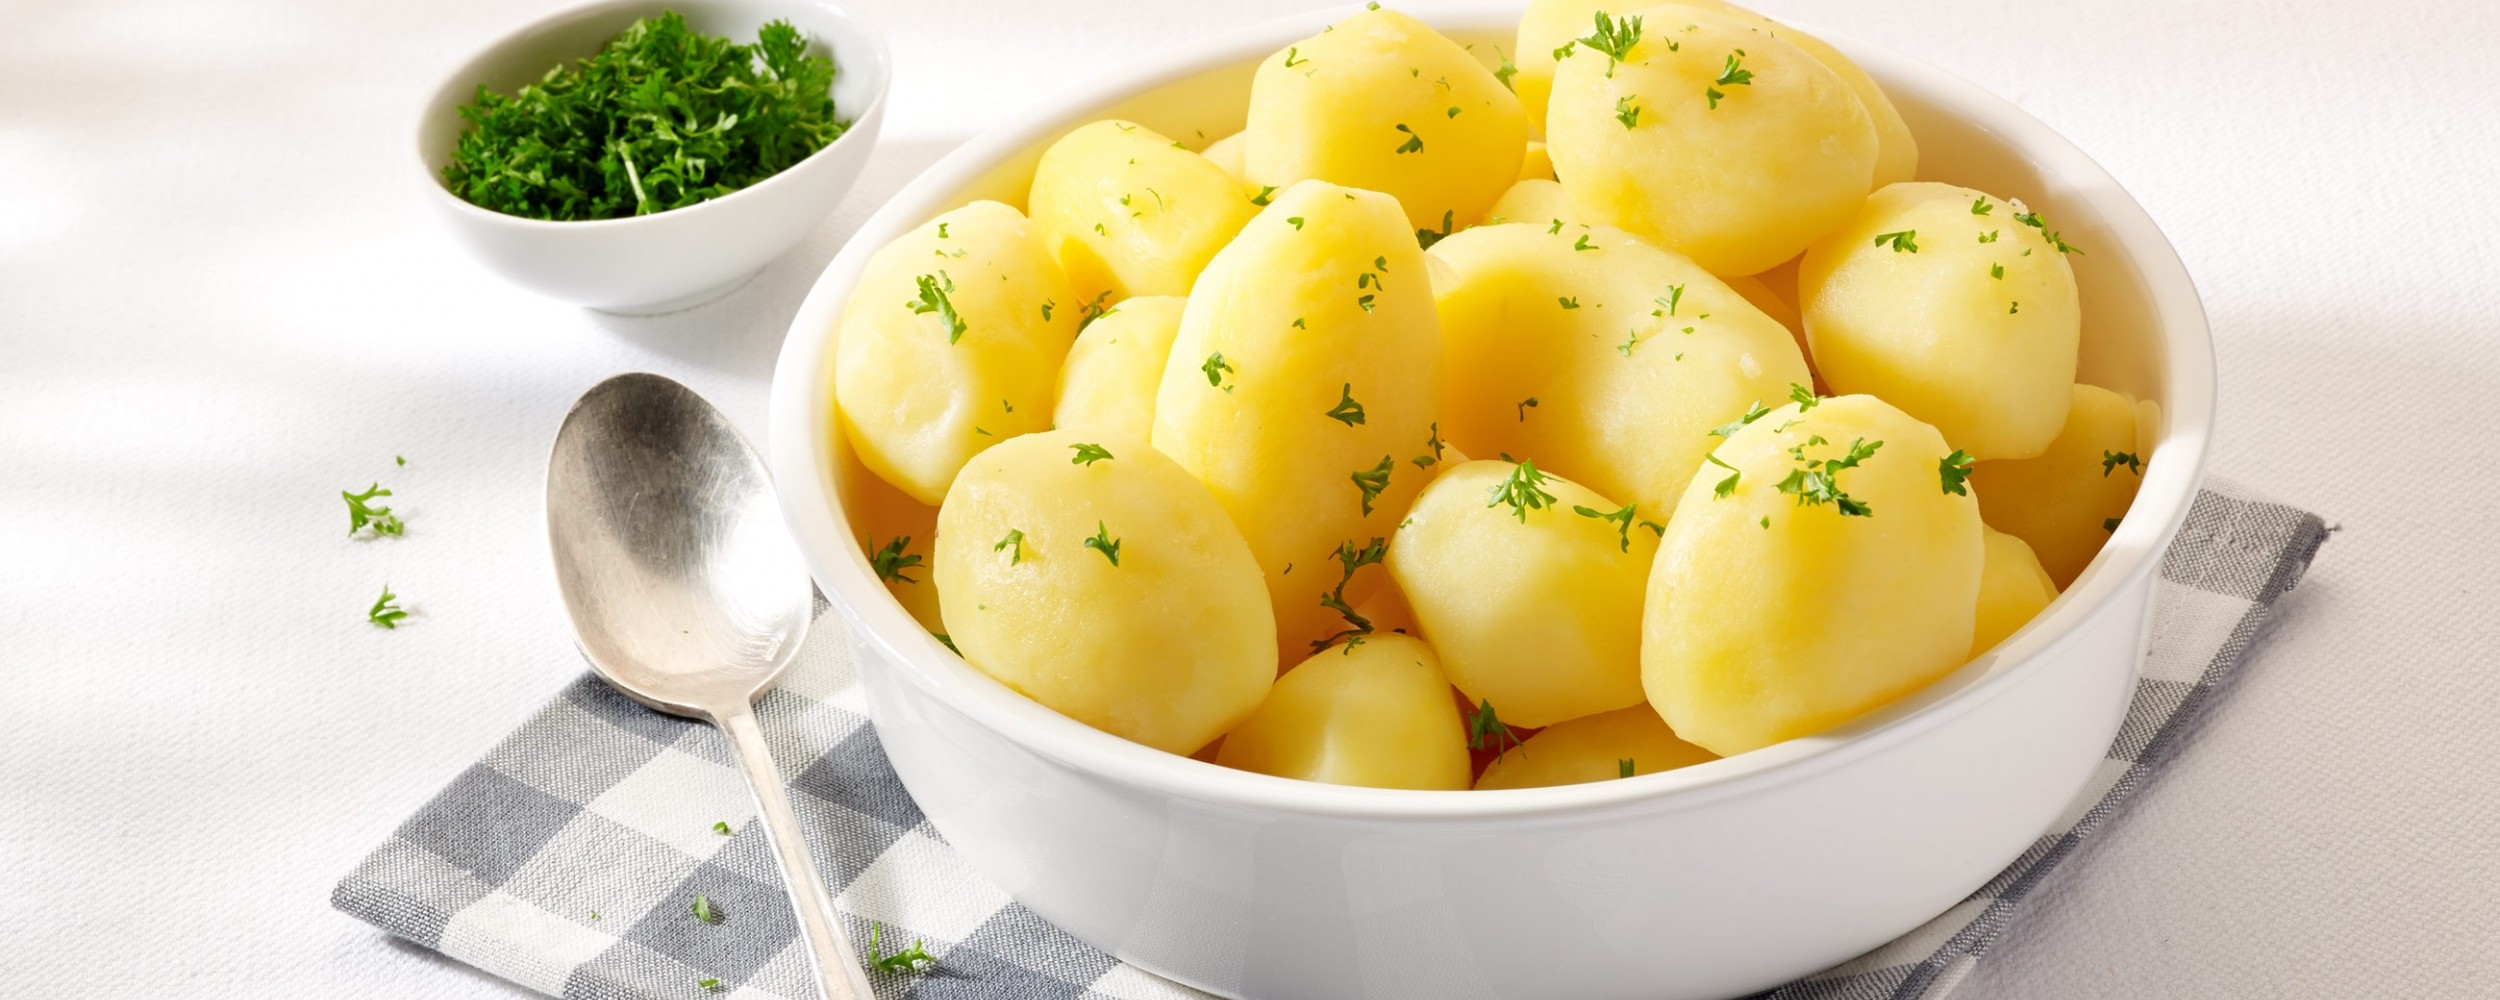 Large potatoes